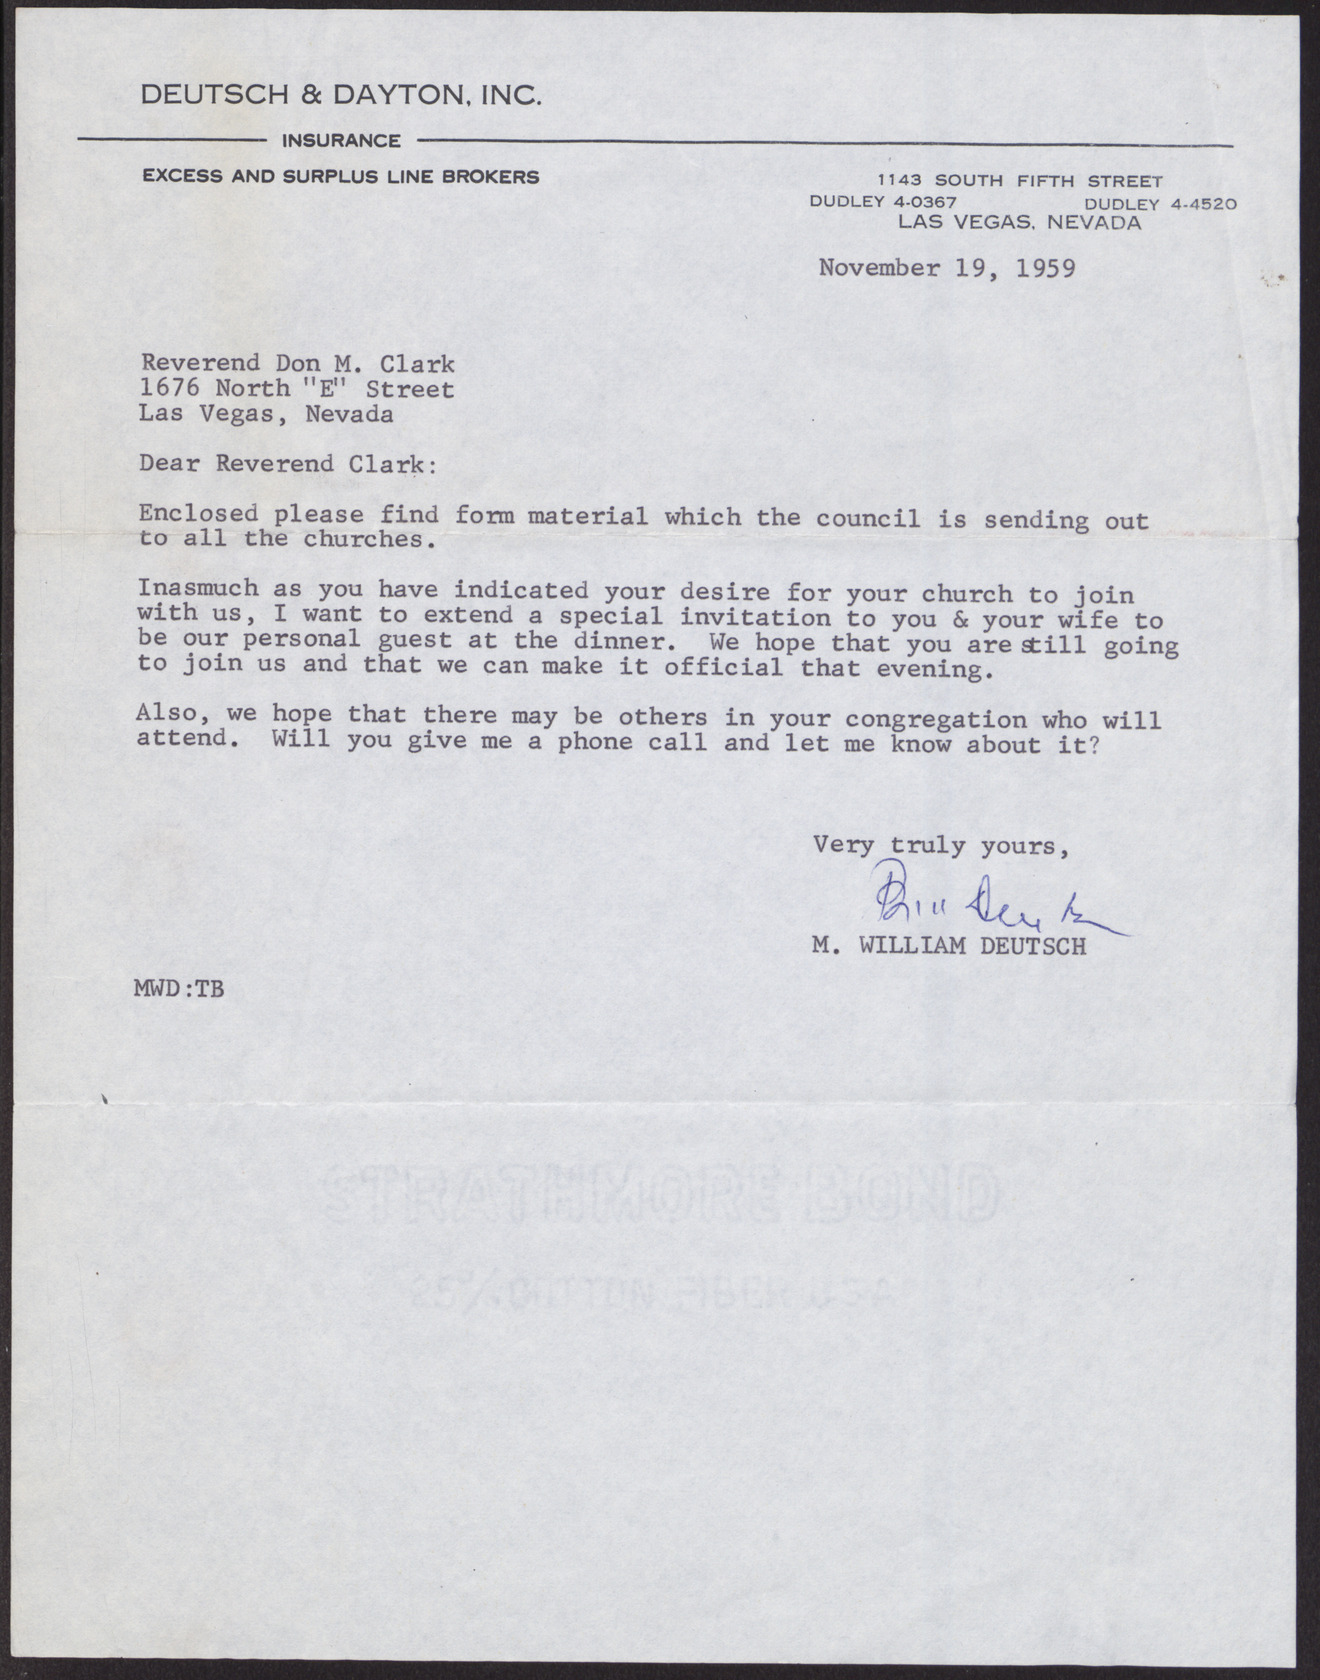 Letter to Reverend Don M. Clark from M. William Deutsch, November 19, 1959